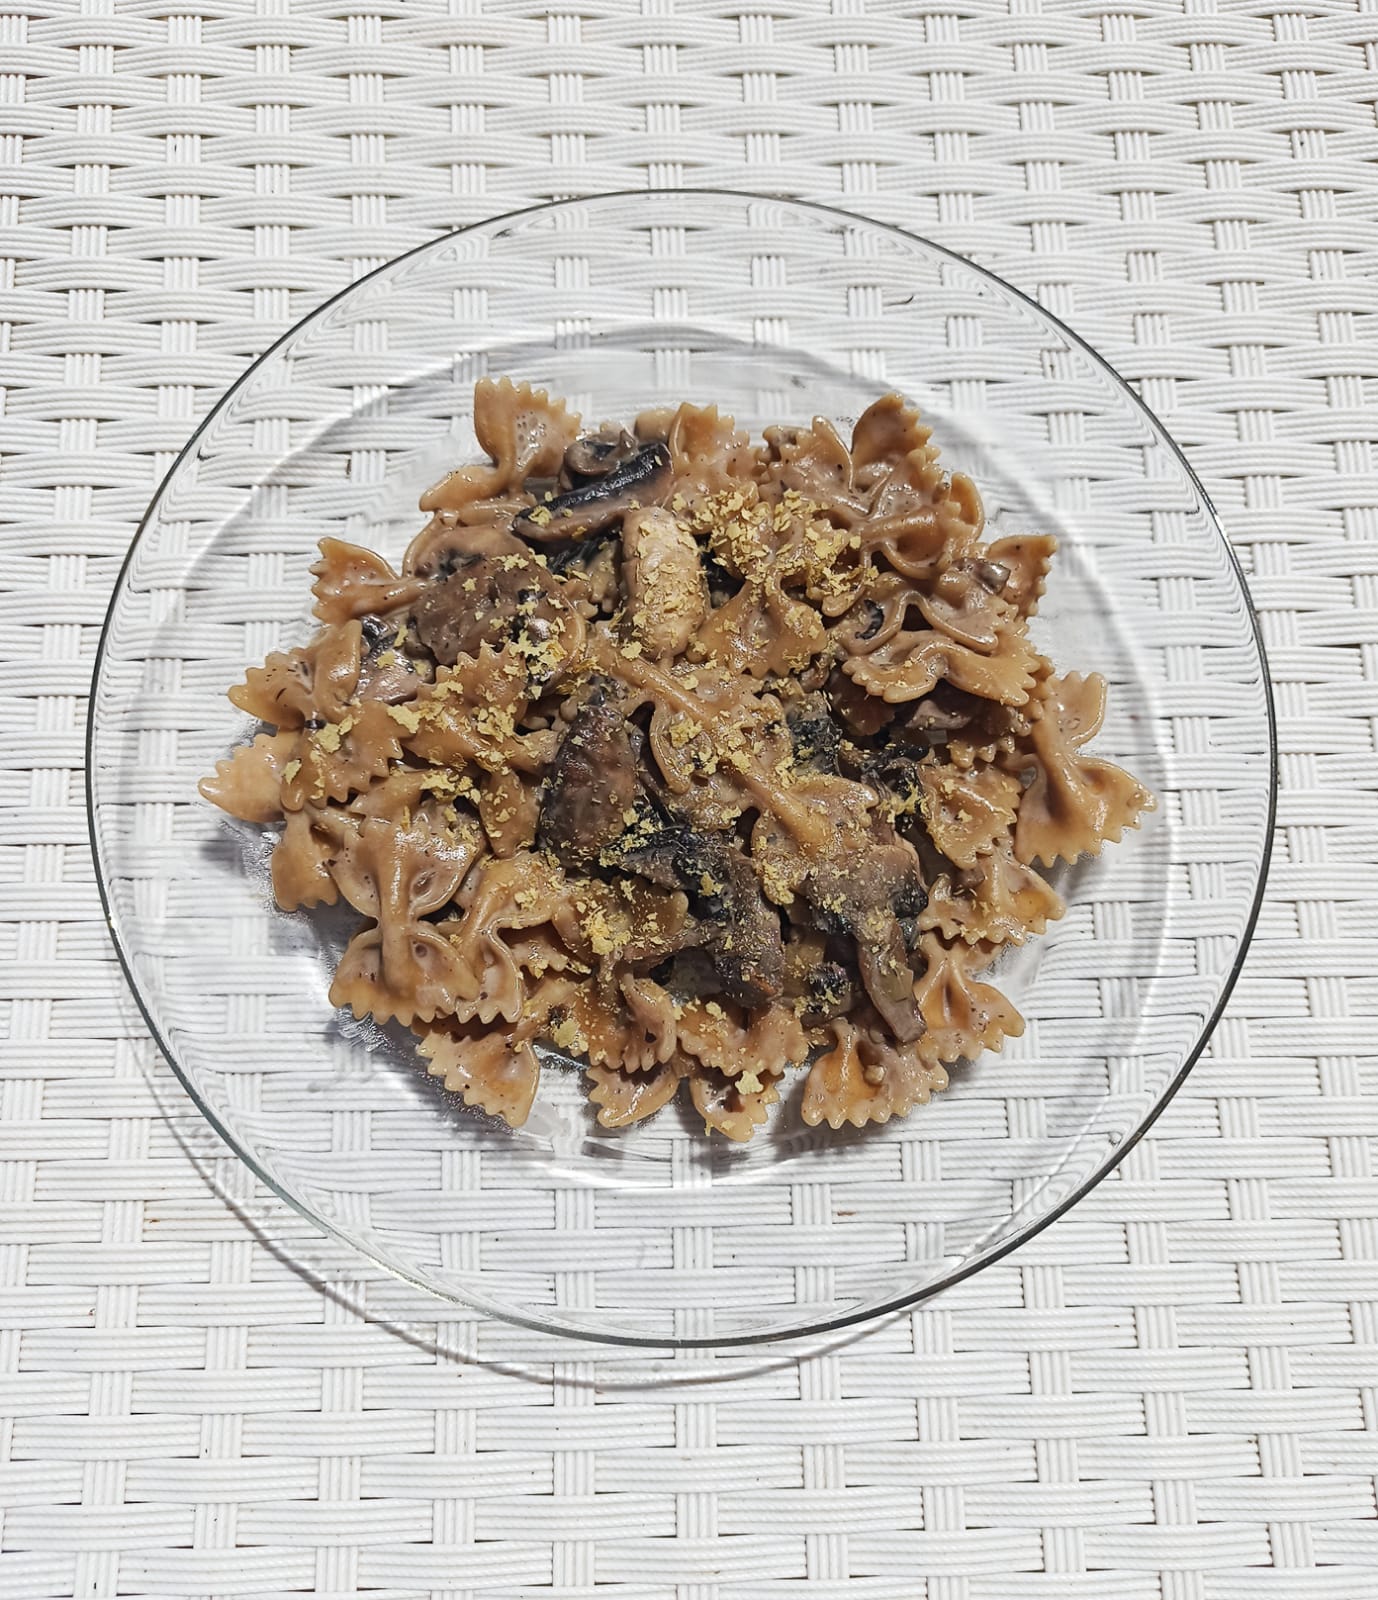 Vegan mushroom stroganoff with wholewheat pasta